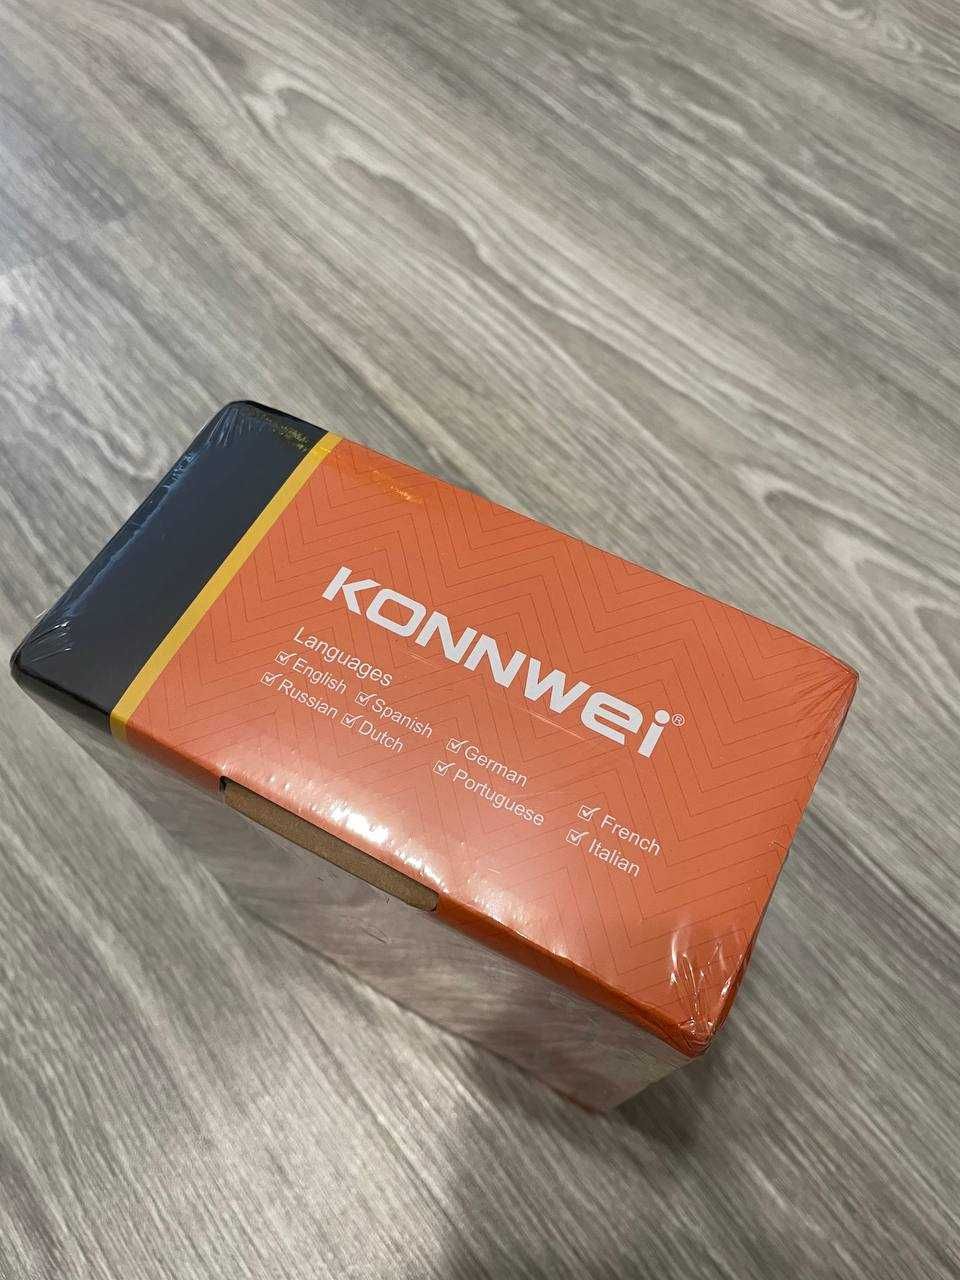 Тестер + зарядка аккумулятора авто Konnwei KW510 АКБ - 6 В, 12 В, 24 В